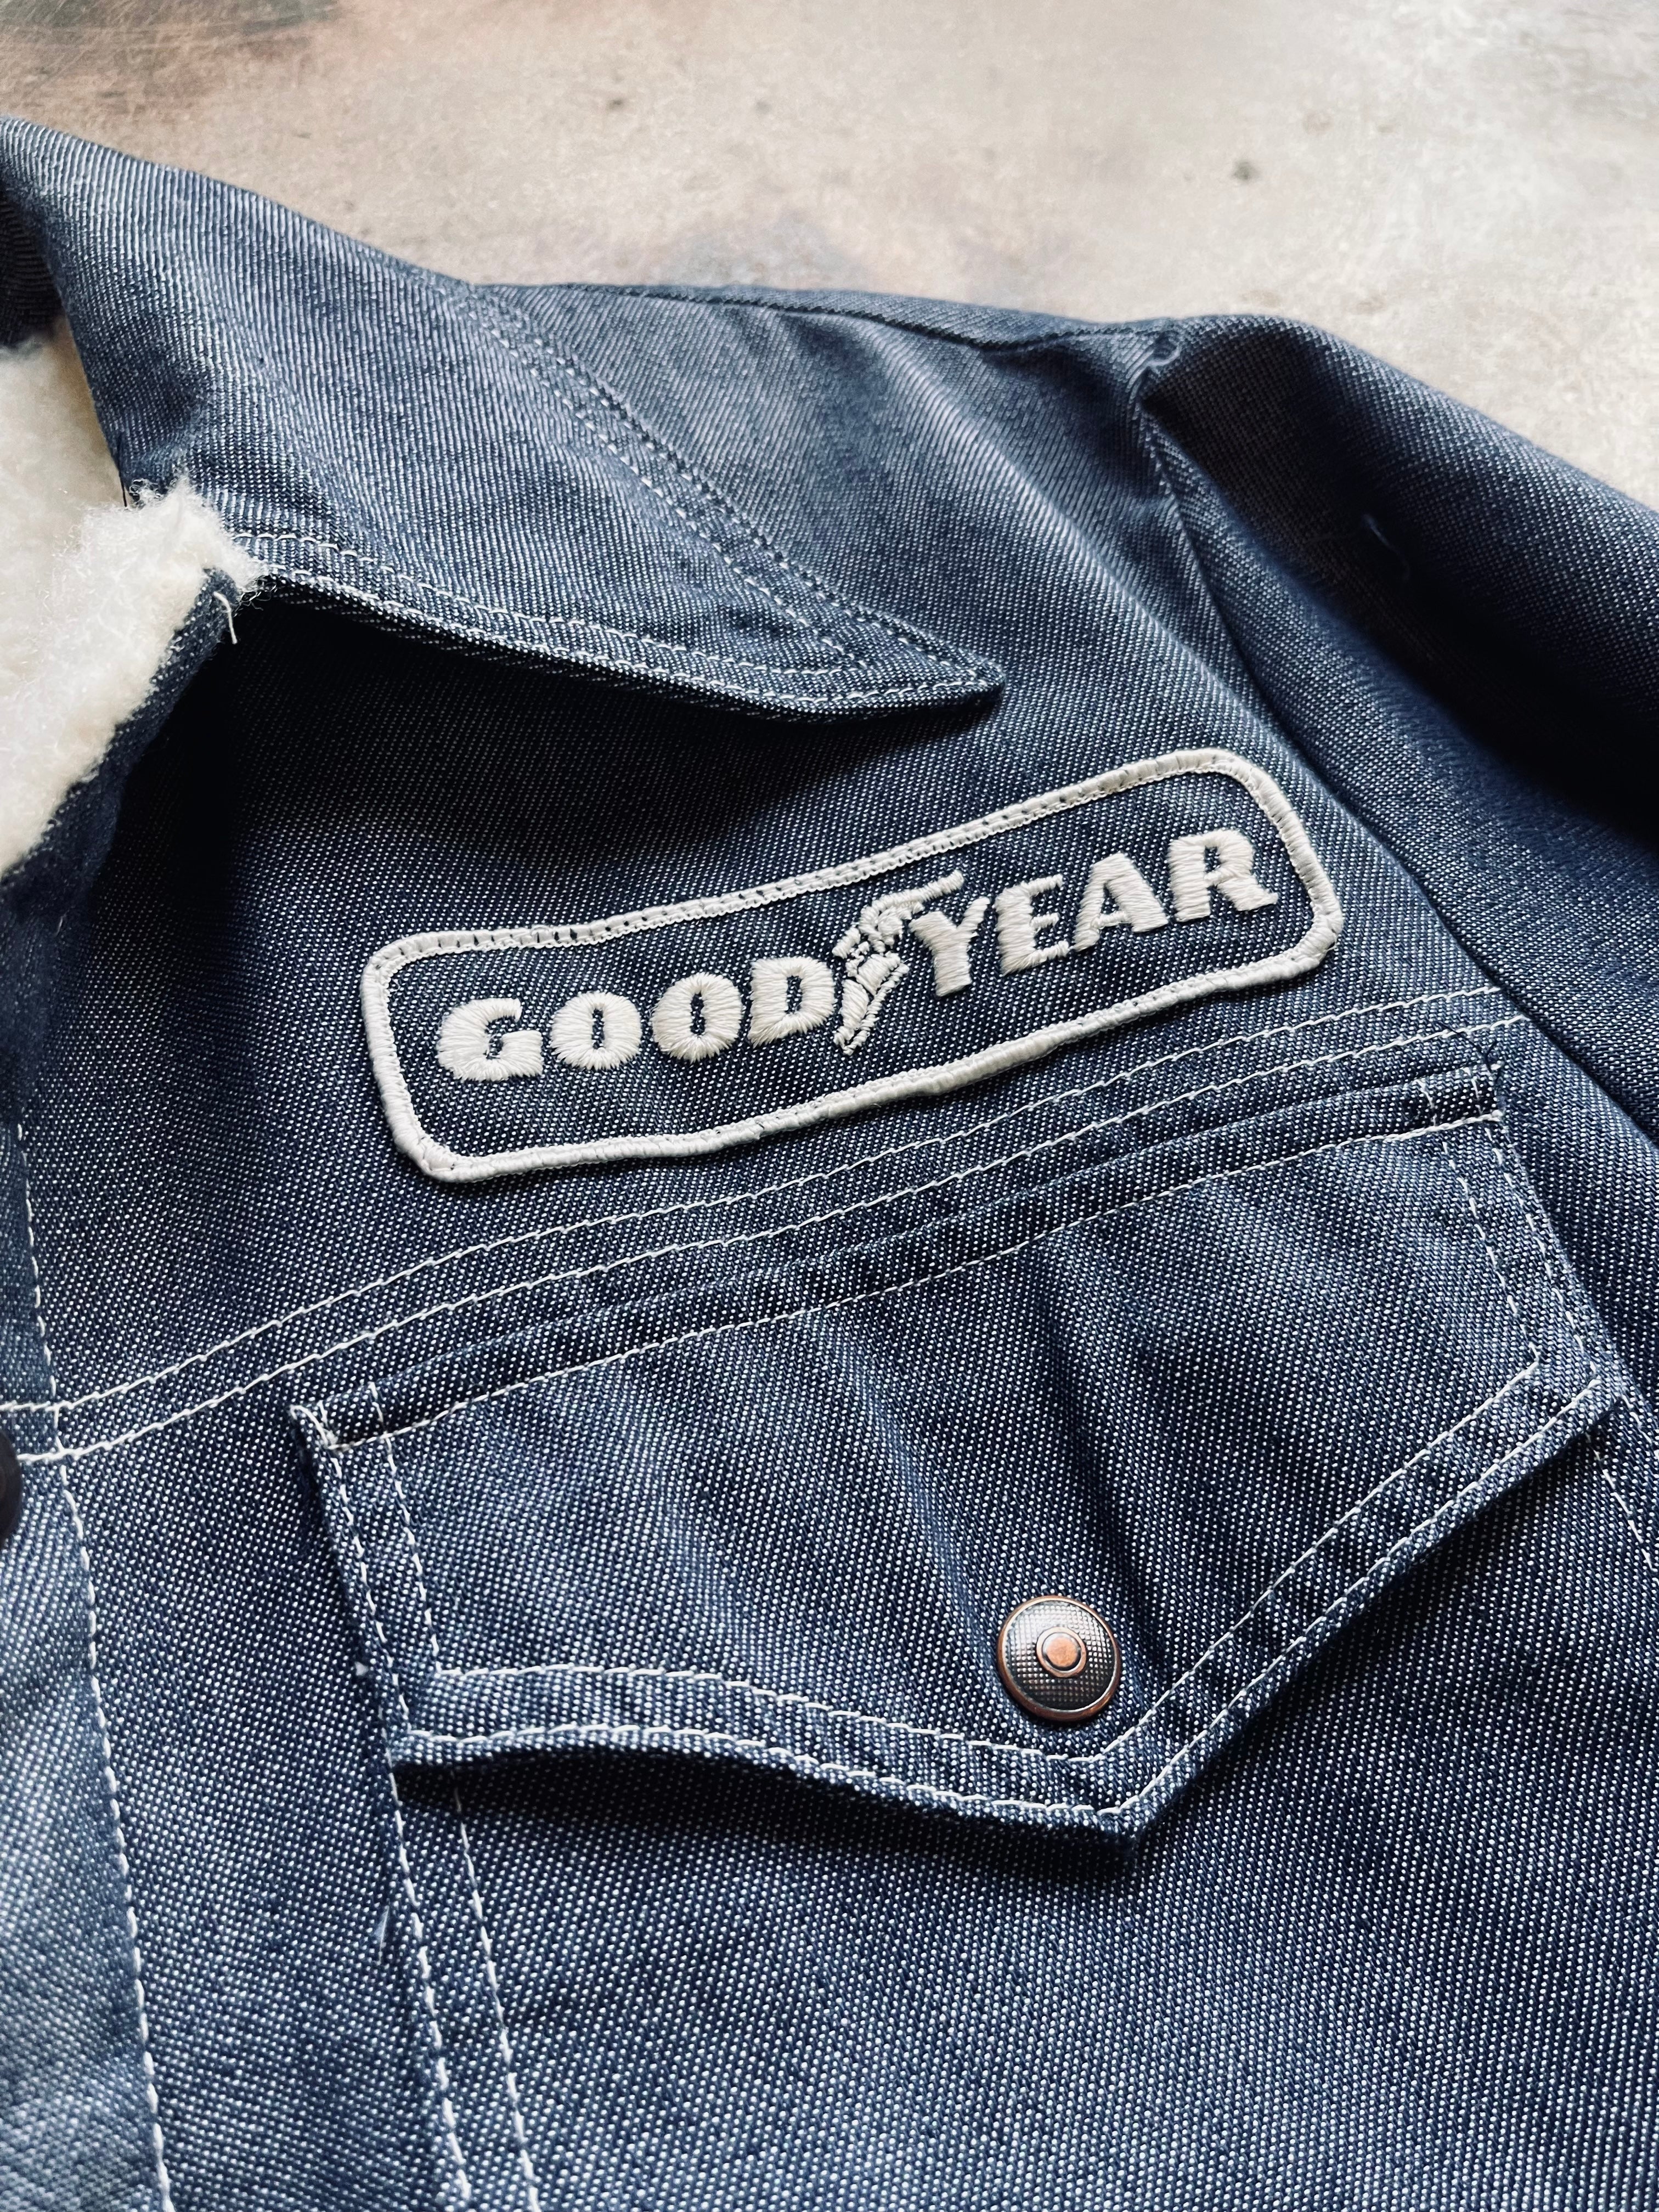 Vintage Goodyear Racing Apparel Denim Jacket | Large